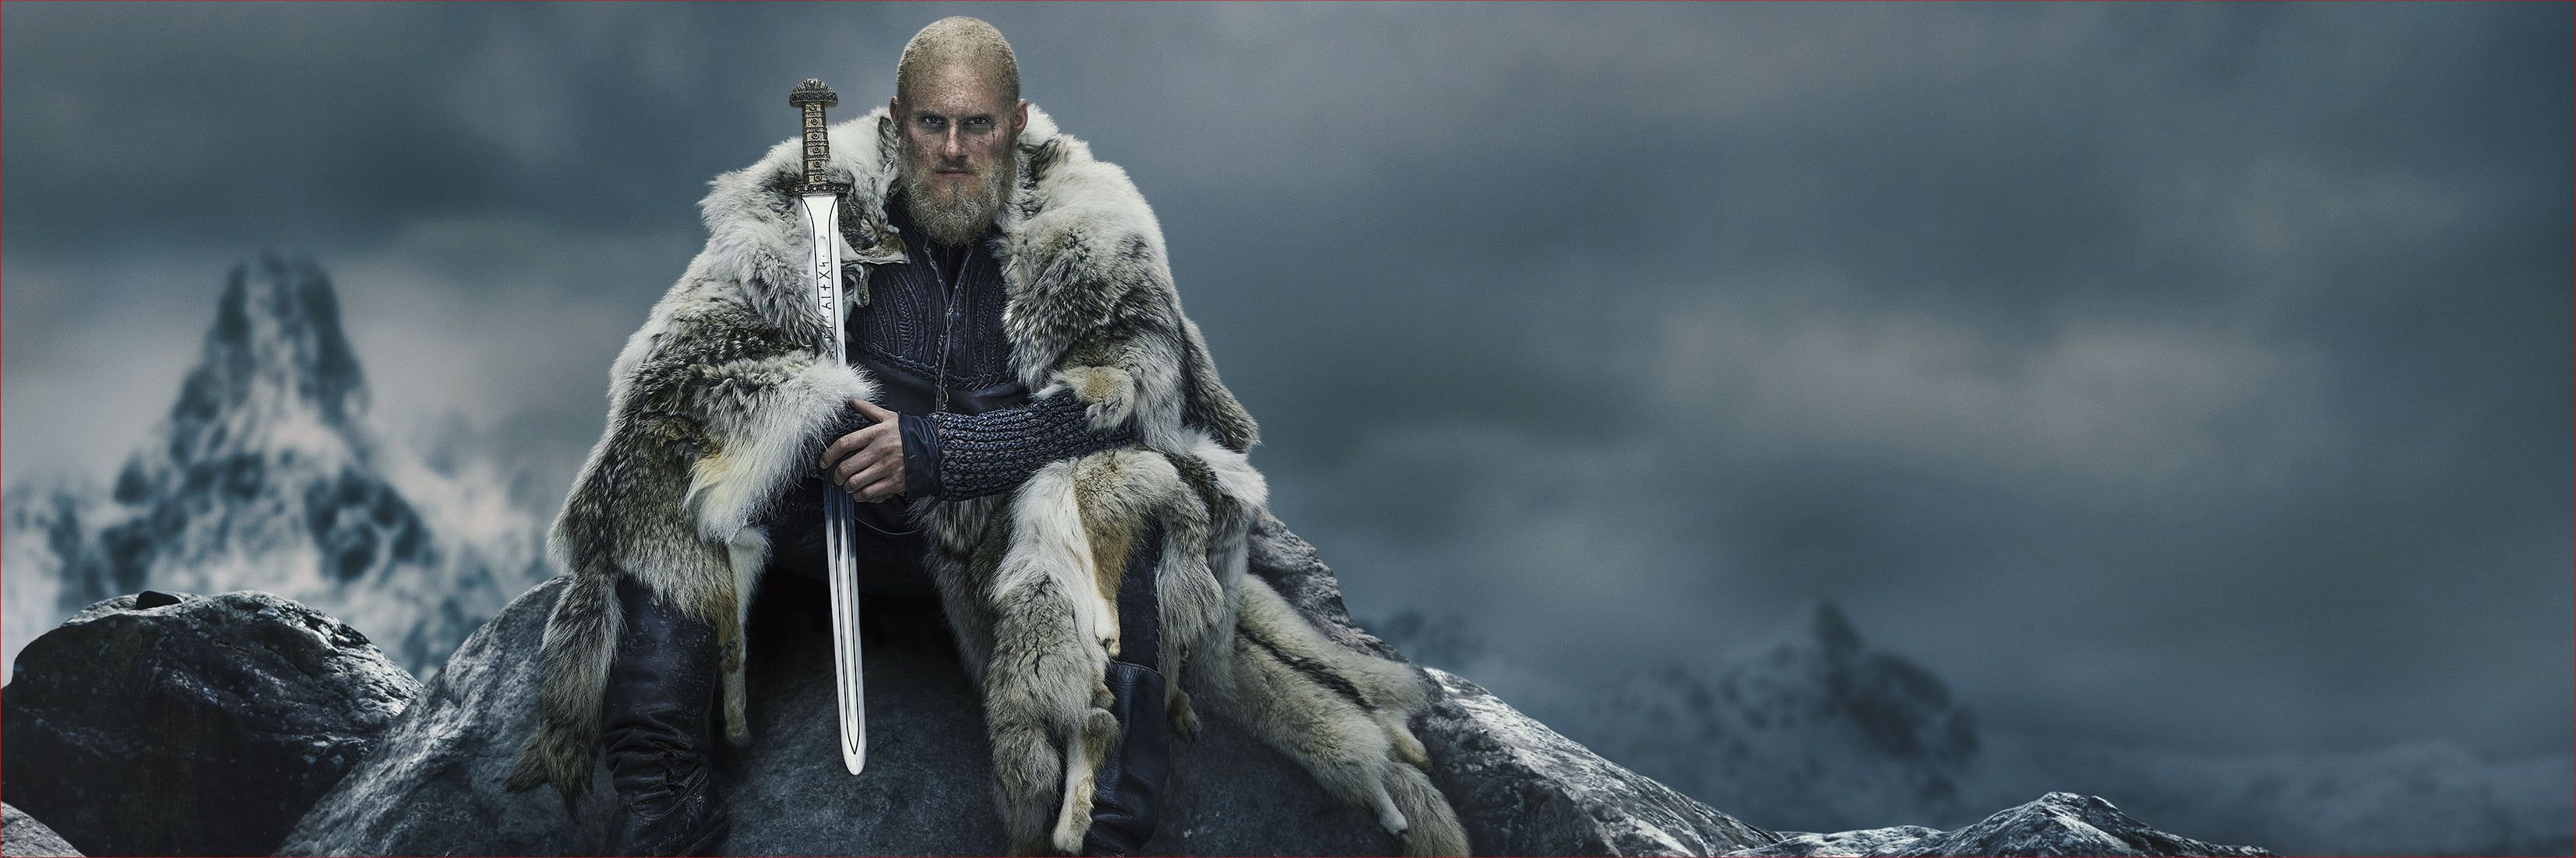 TV Show #Vikings Bjorn Lothbrok K #wallpaper #hdwallpaper #desktop. Vikings, Bjorn lothbrok, Bjorn